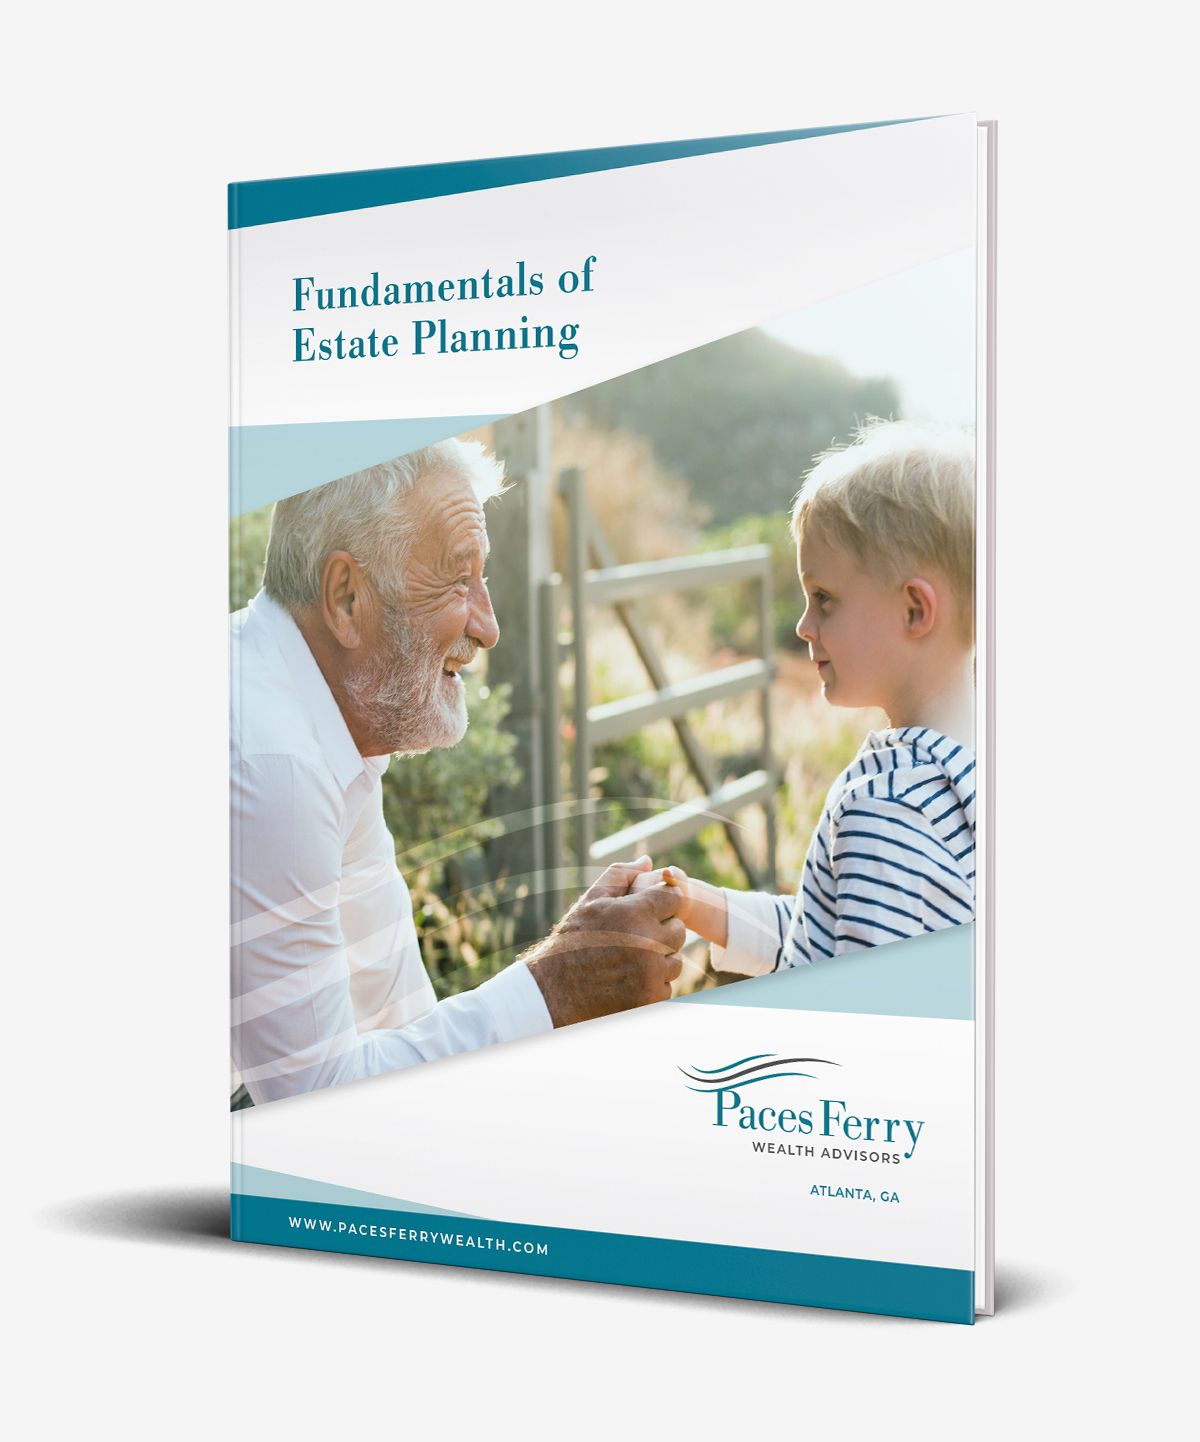 financial planning whitepaper: fundamentals of estate planning